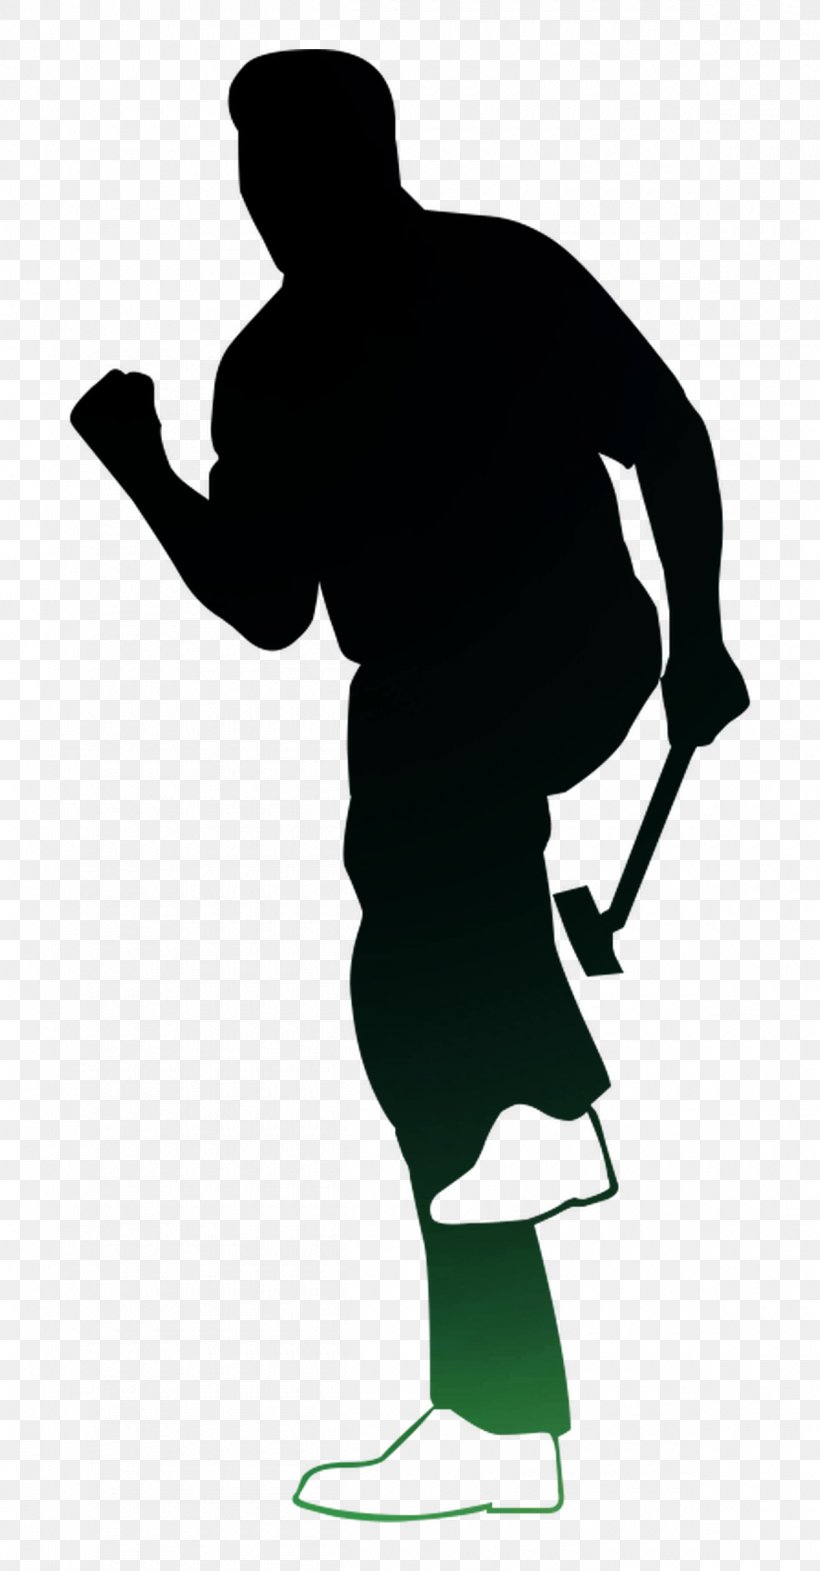 Golf Stroke Mechanics Silhouette Golf Clubs Clip Art, PNG, 1200x2300px, Golf, Disc Golf, Golf Clubs, Golf Course, Golf Stroke Mechanics Download Free